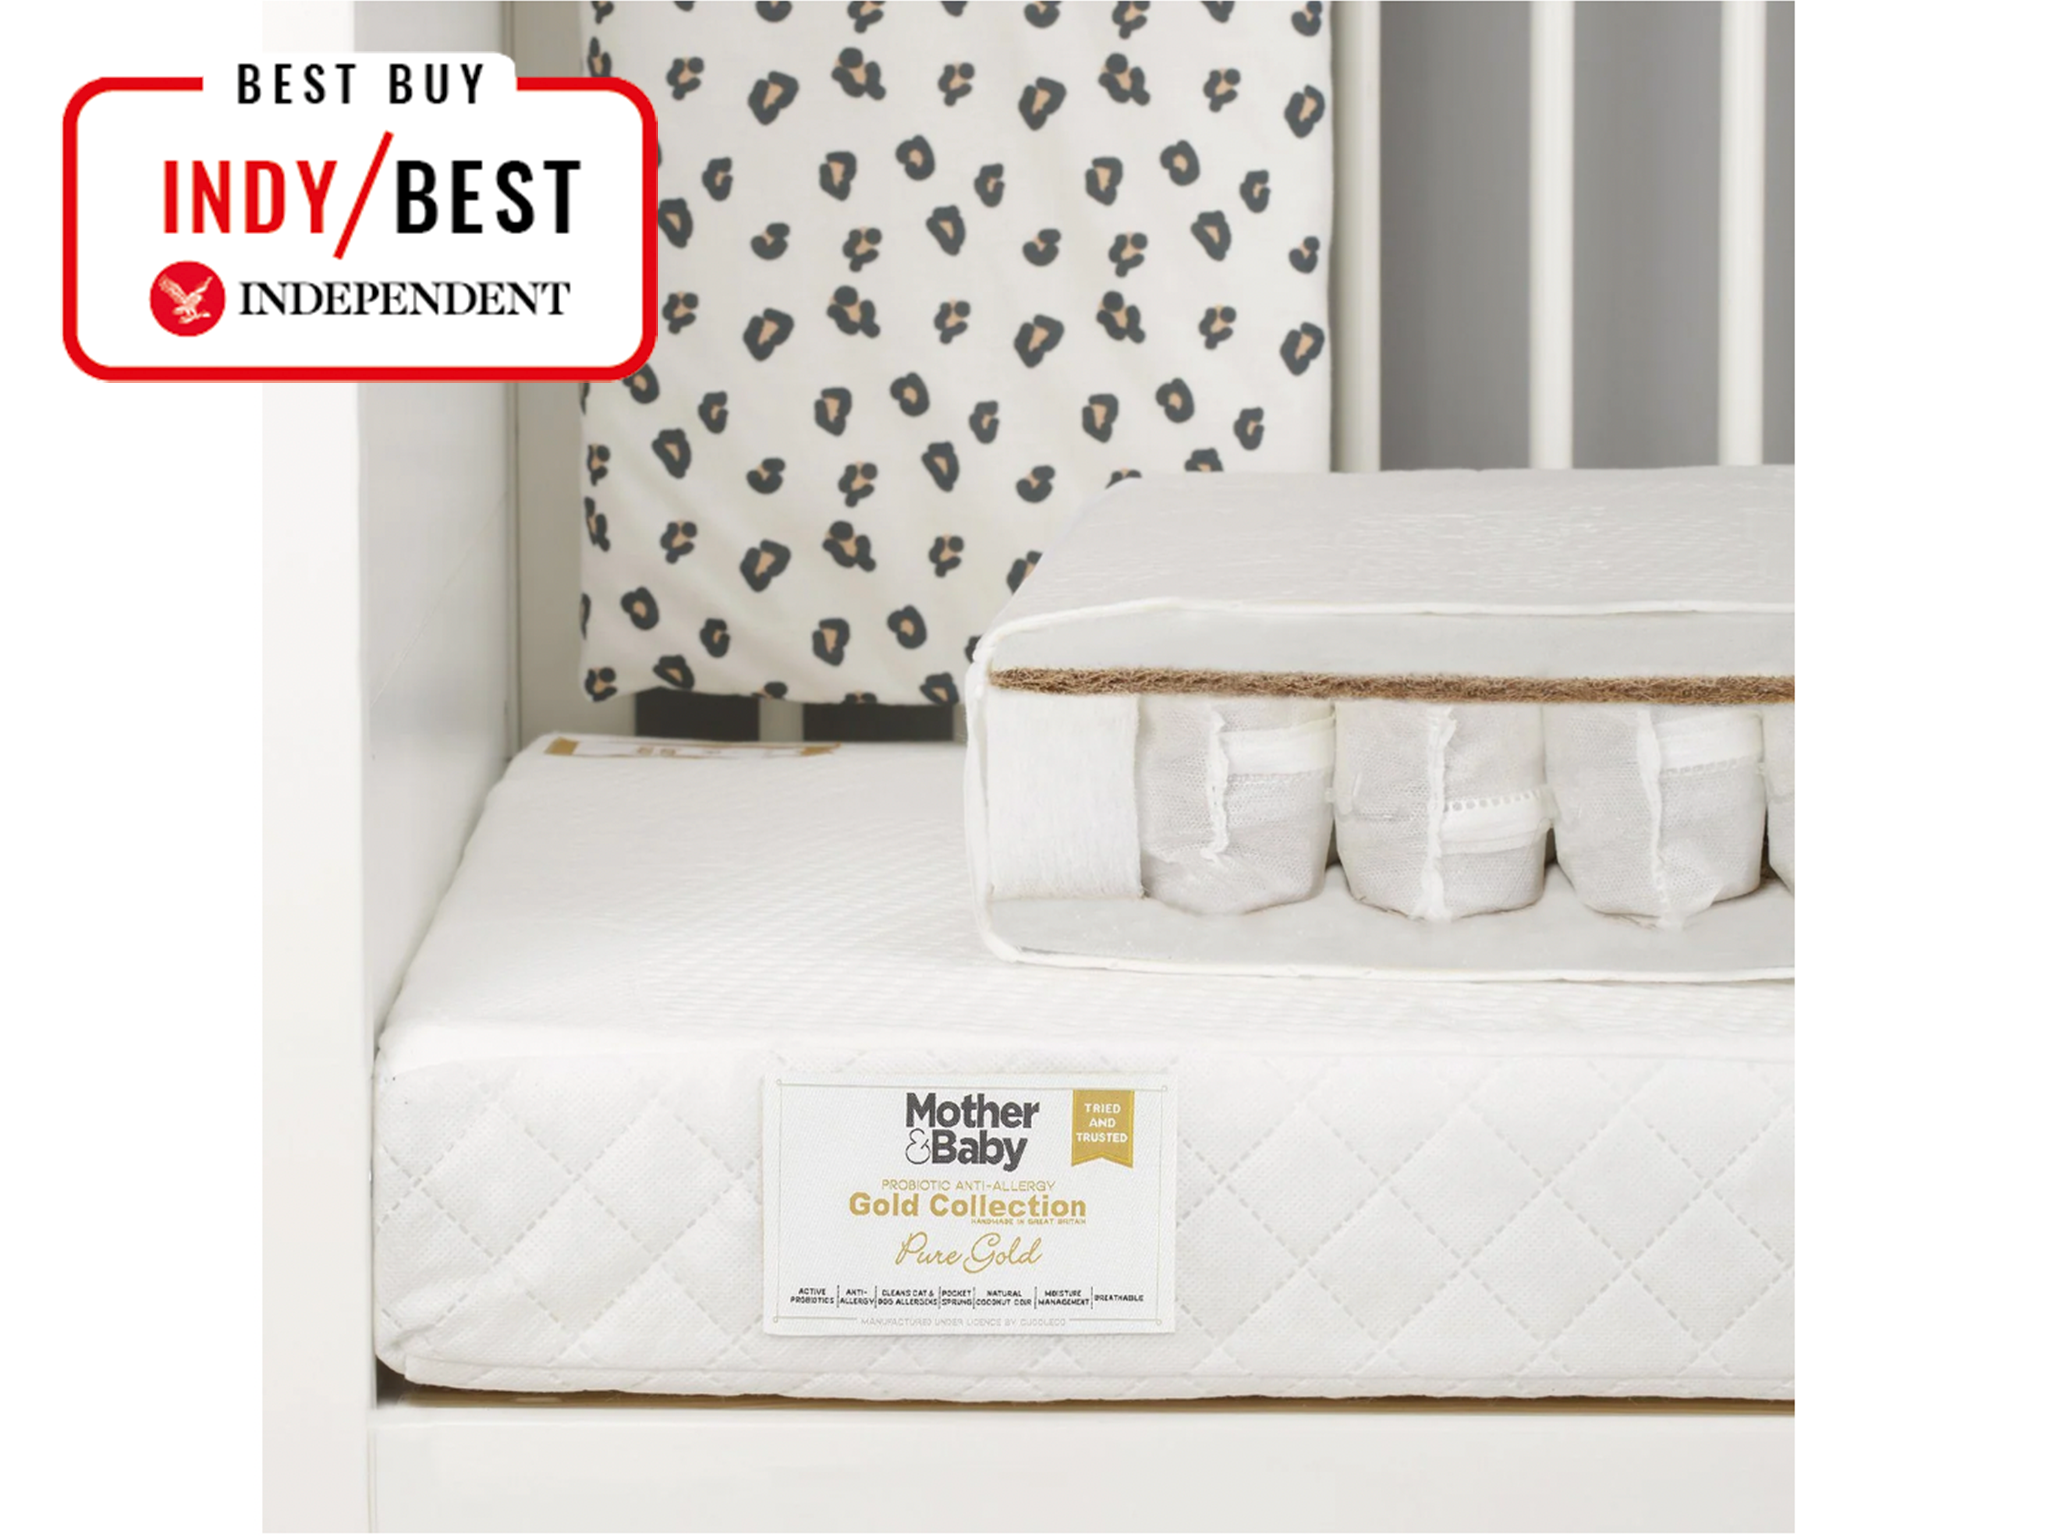 best cot mattress Mother&Baby pure gold anti-allergy coir pocket sprung cot bed mattress